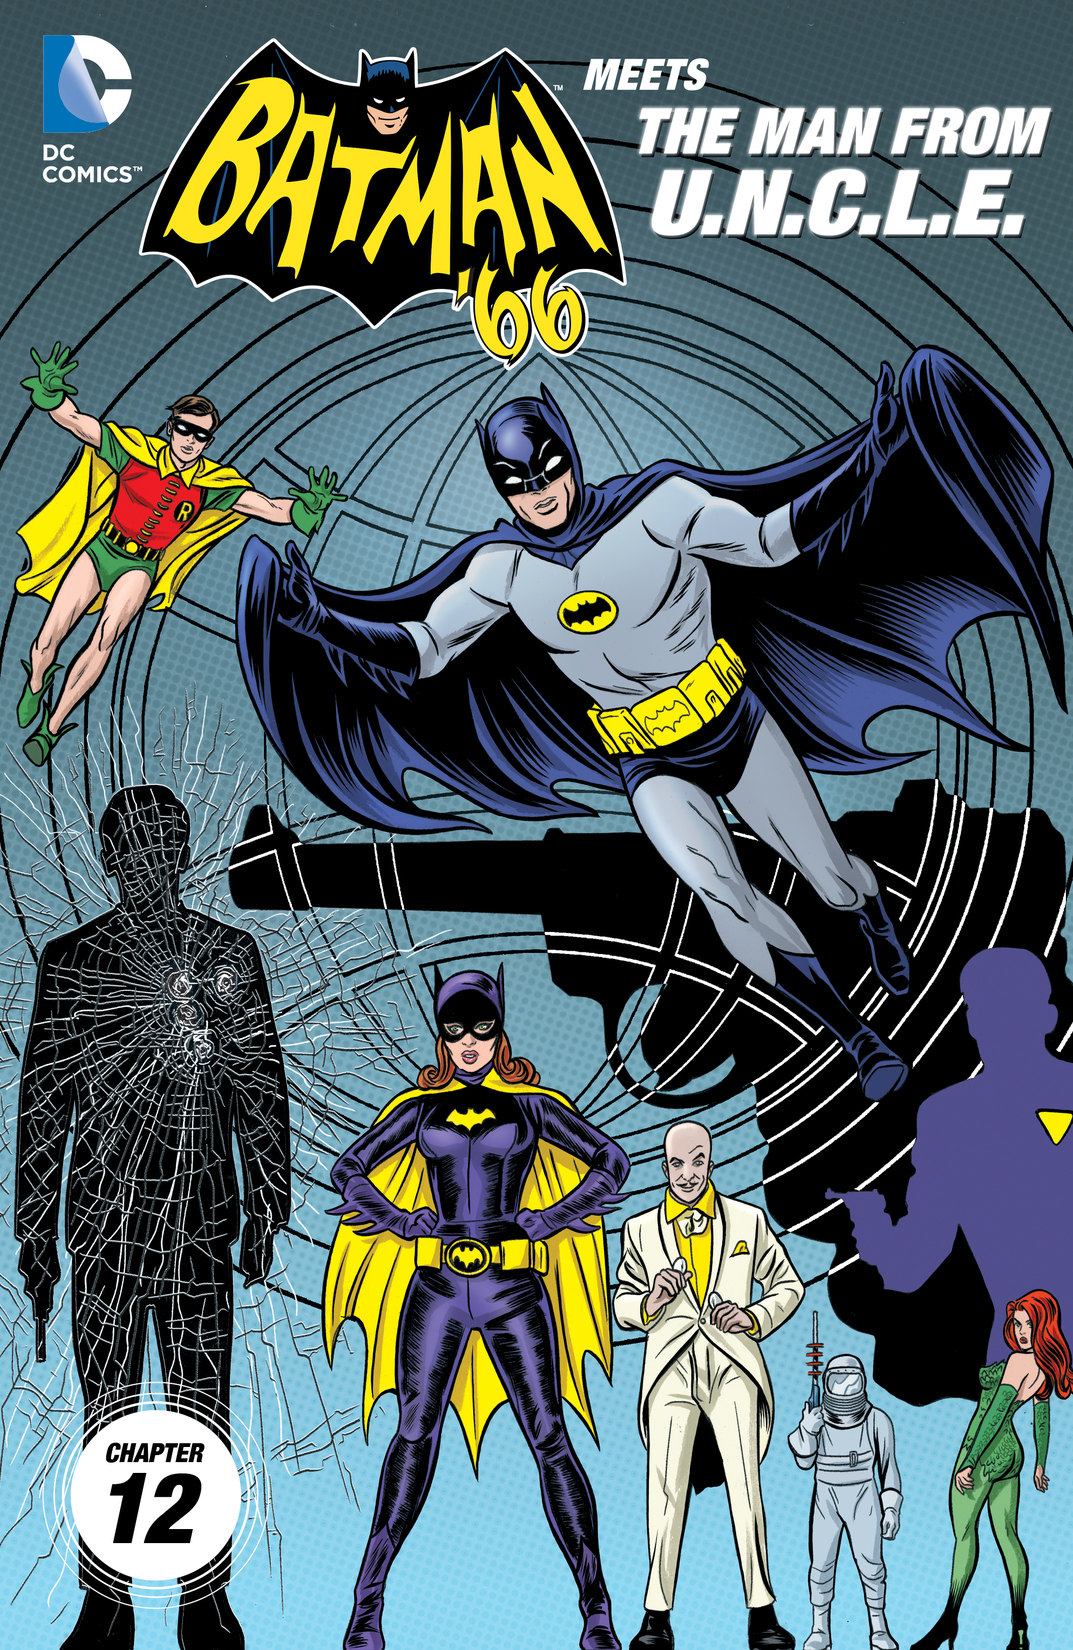 Batman '66 Meets The Man From U.N.C.L.E. #12 preview images